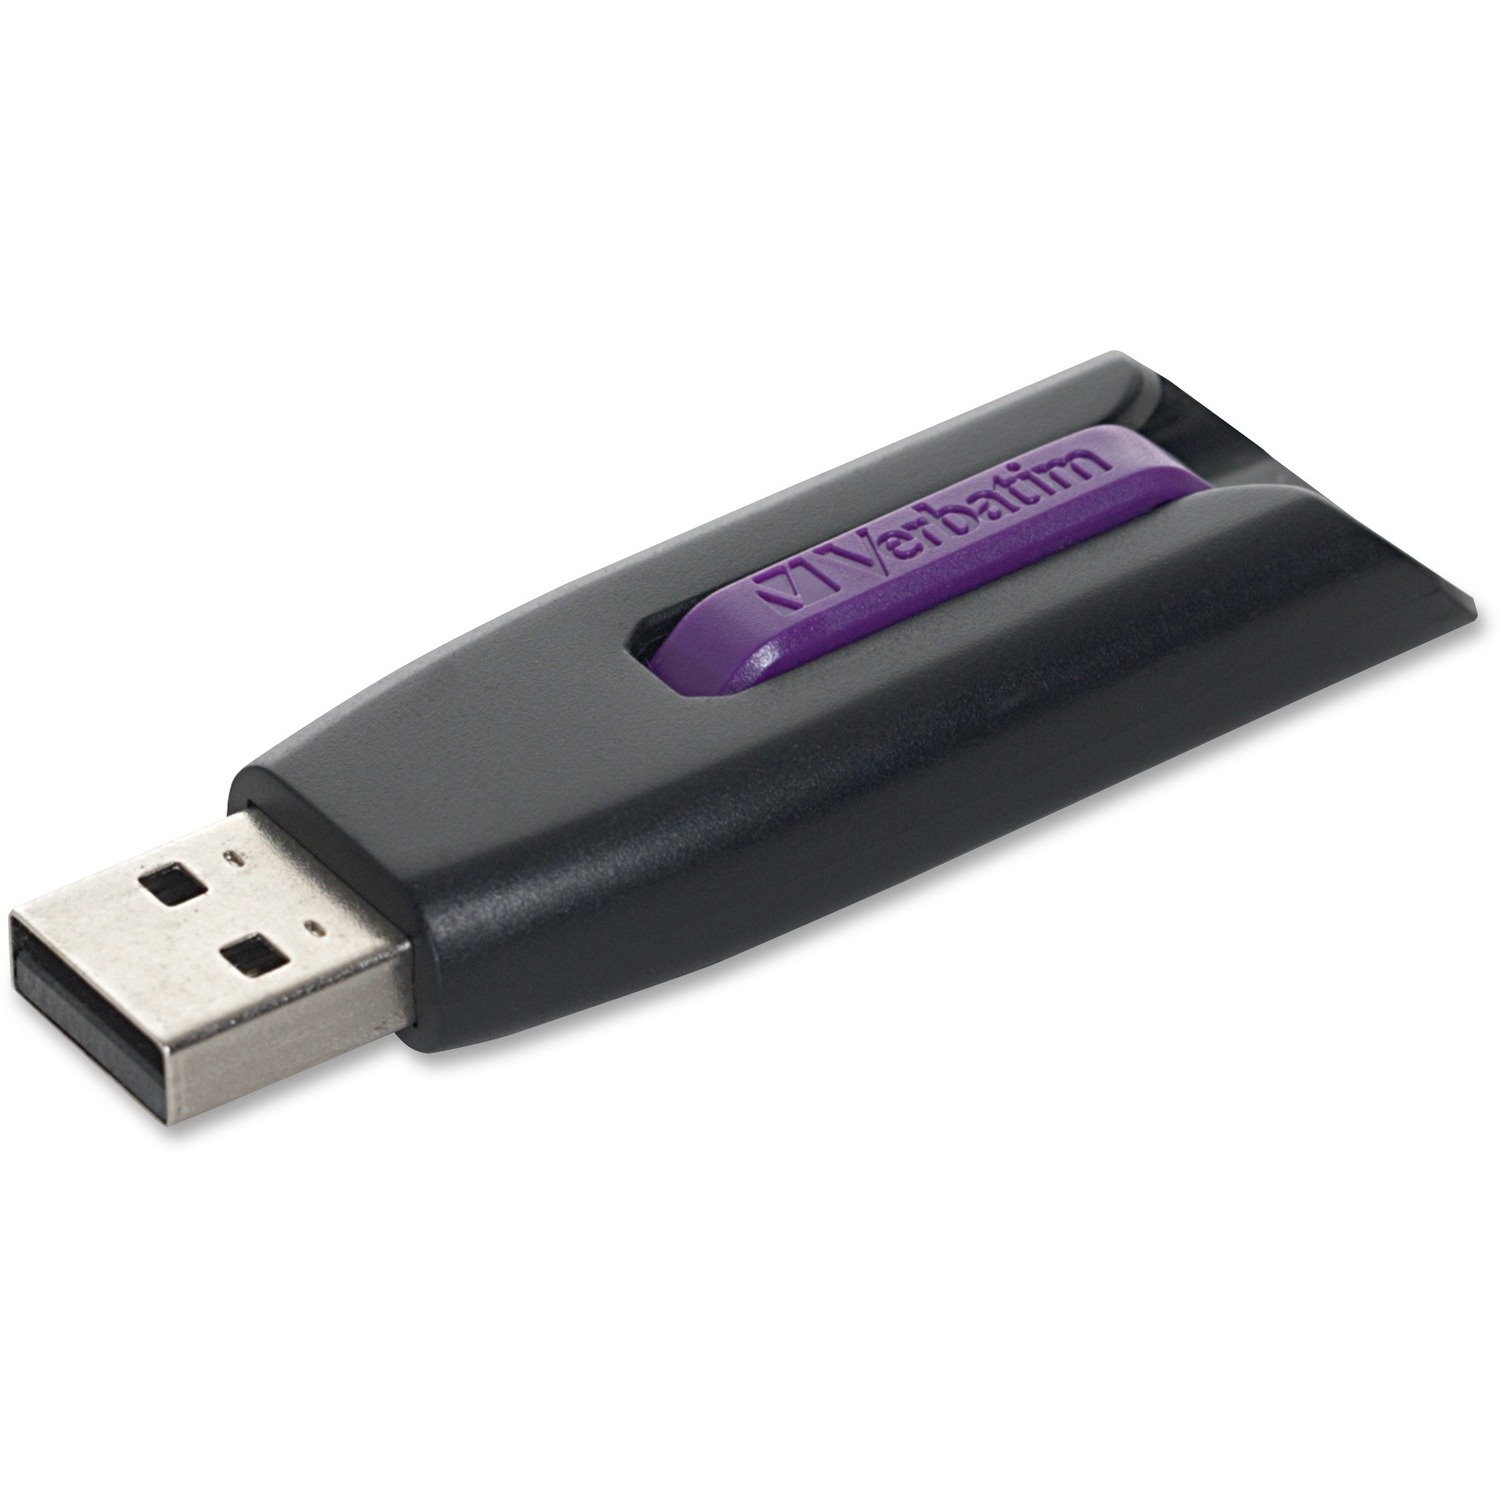 Verbatim Store 'n' Go V3 16 GB USB 3.0 Flash Drive - Purple, Black